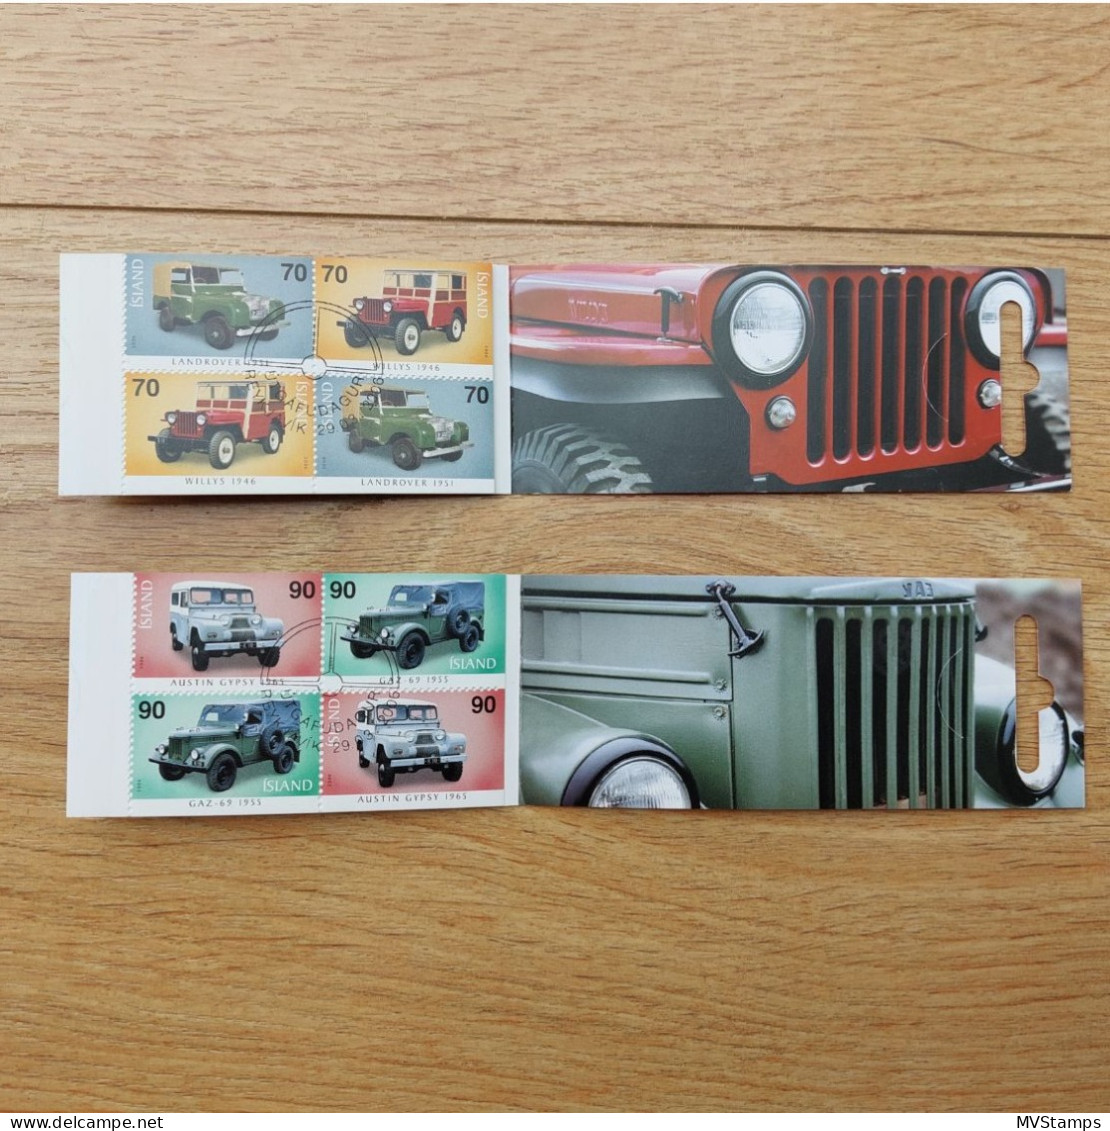 Iceland 2006 Set Stampbooklets Auto's/Cars Stamps (Michel MH 22/23) Used - Markenheftchen